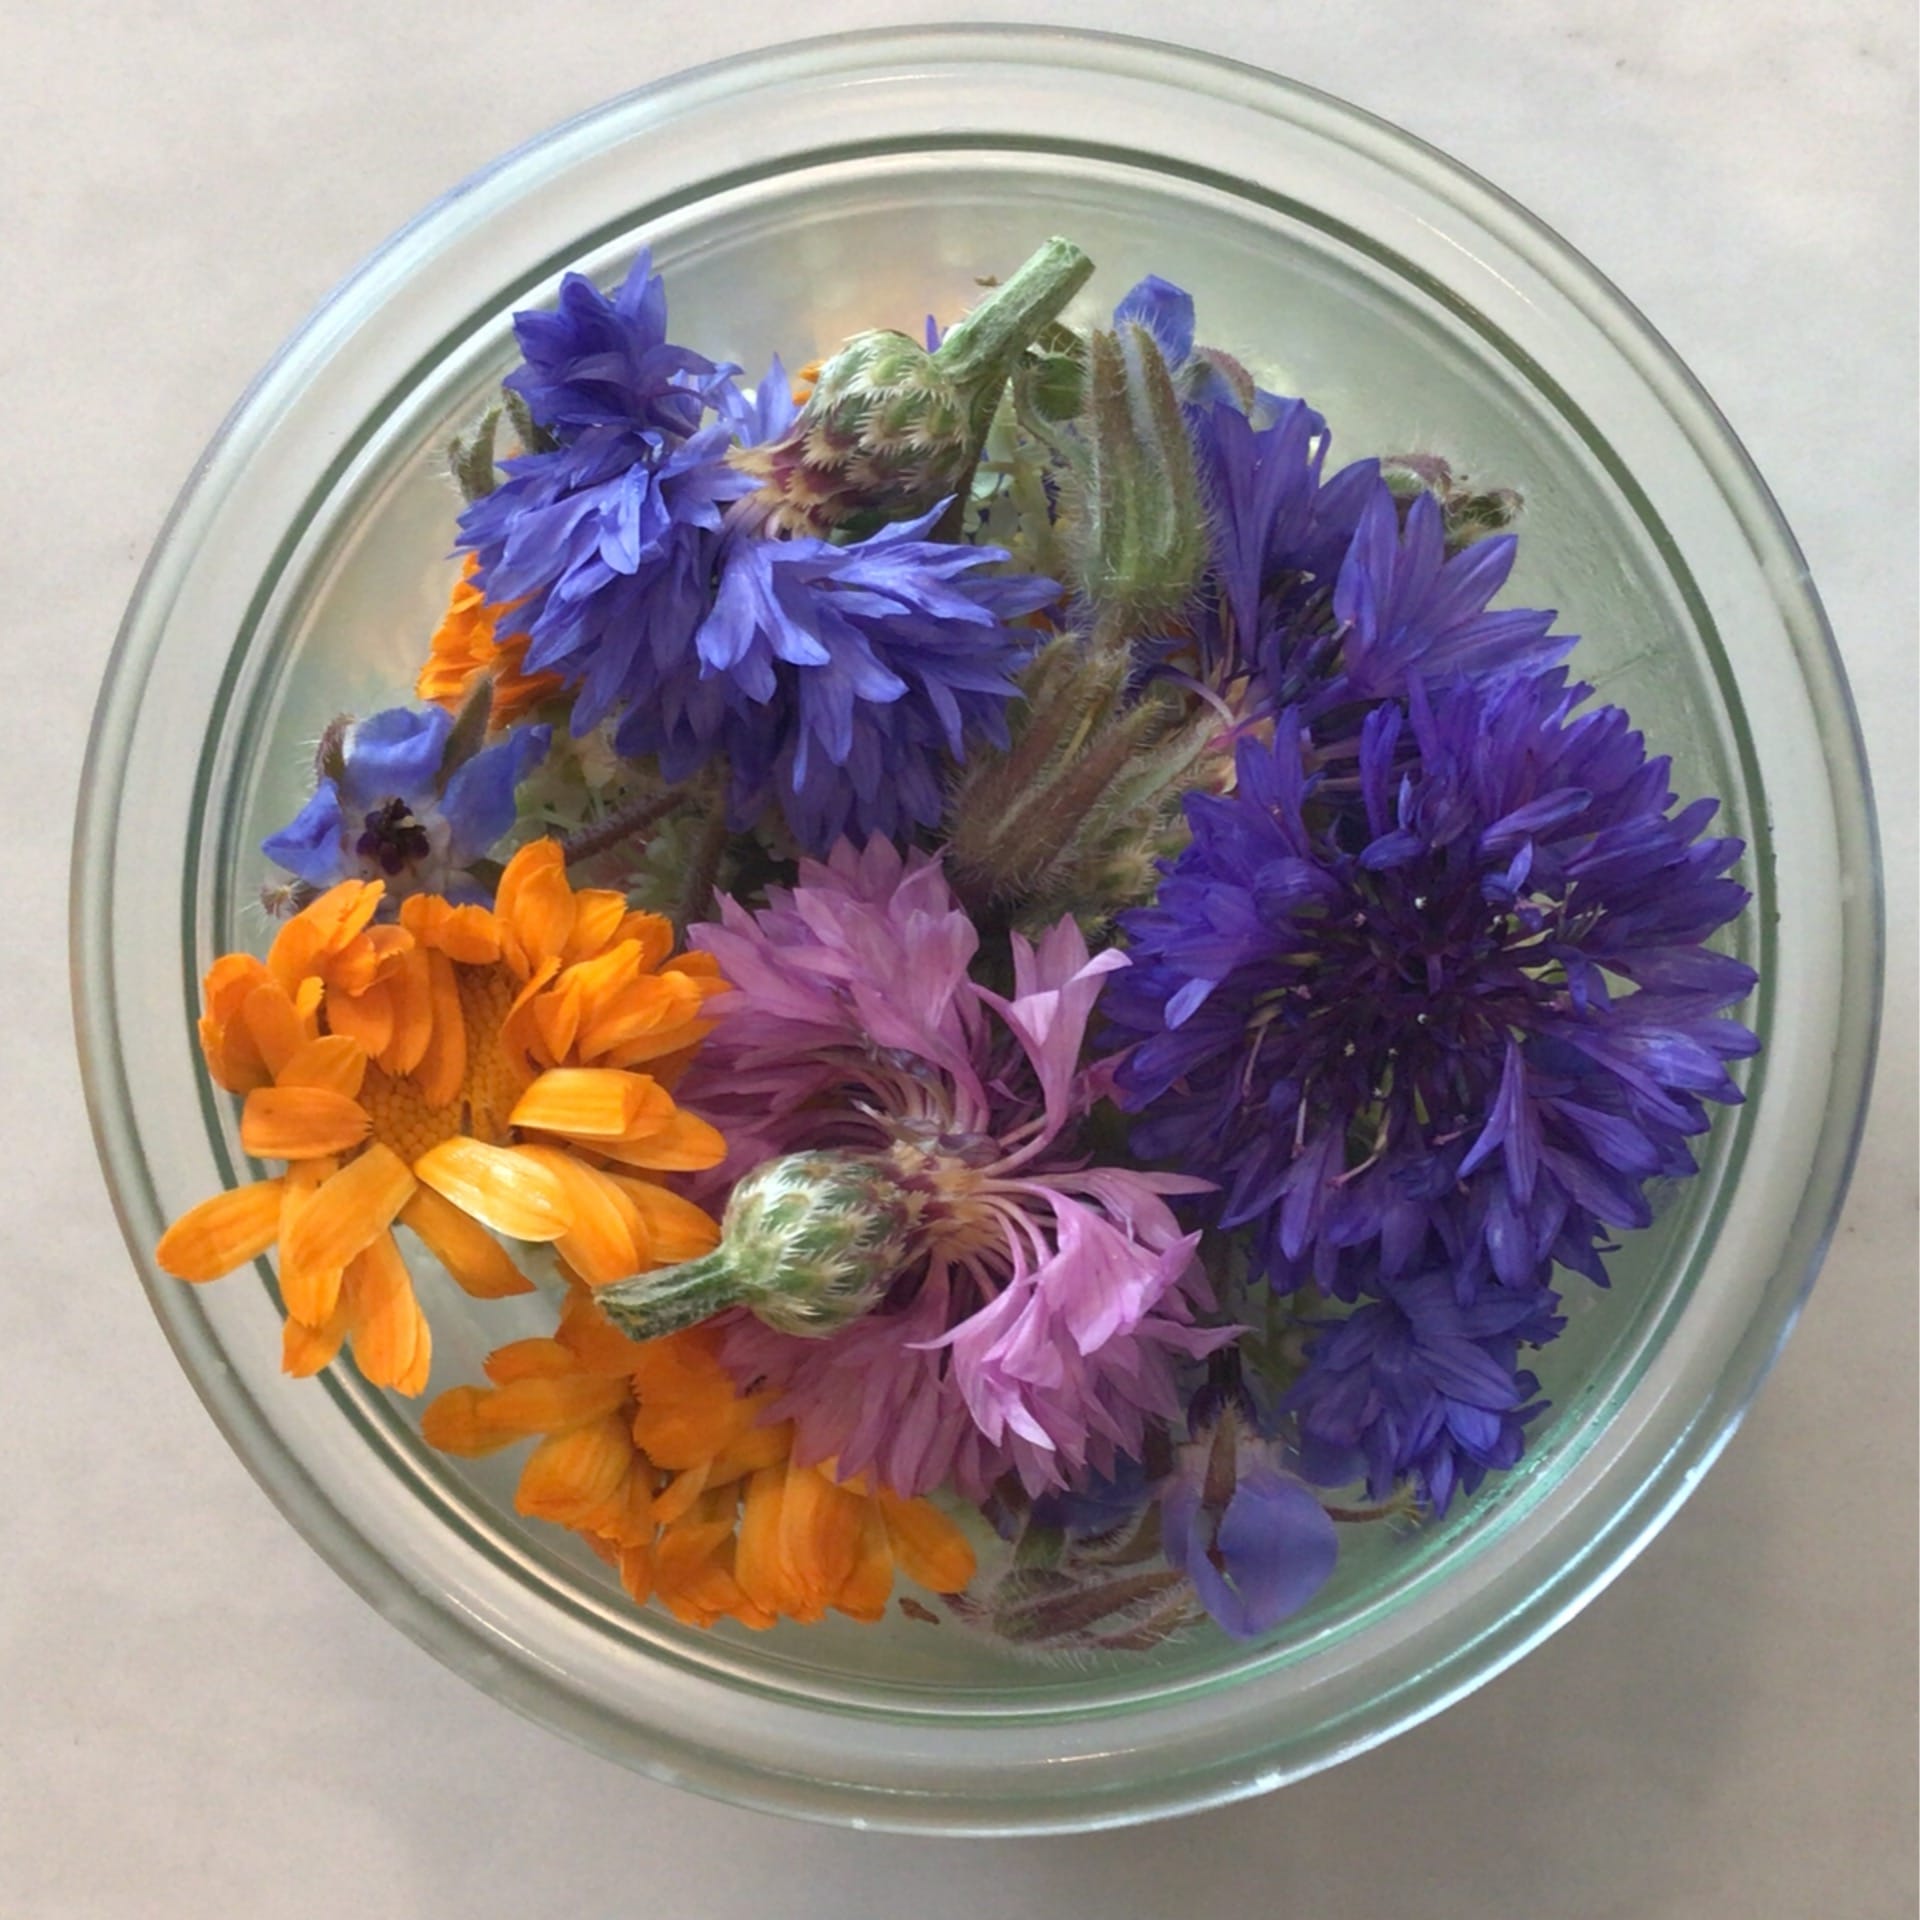 sold out benson bounty edible flowers jar deposit